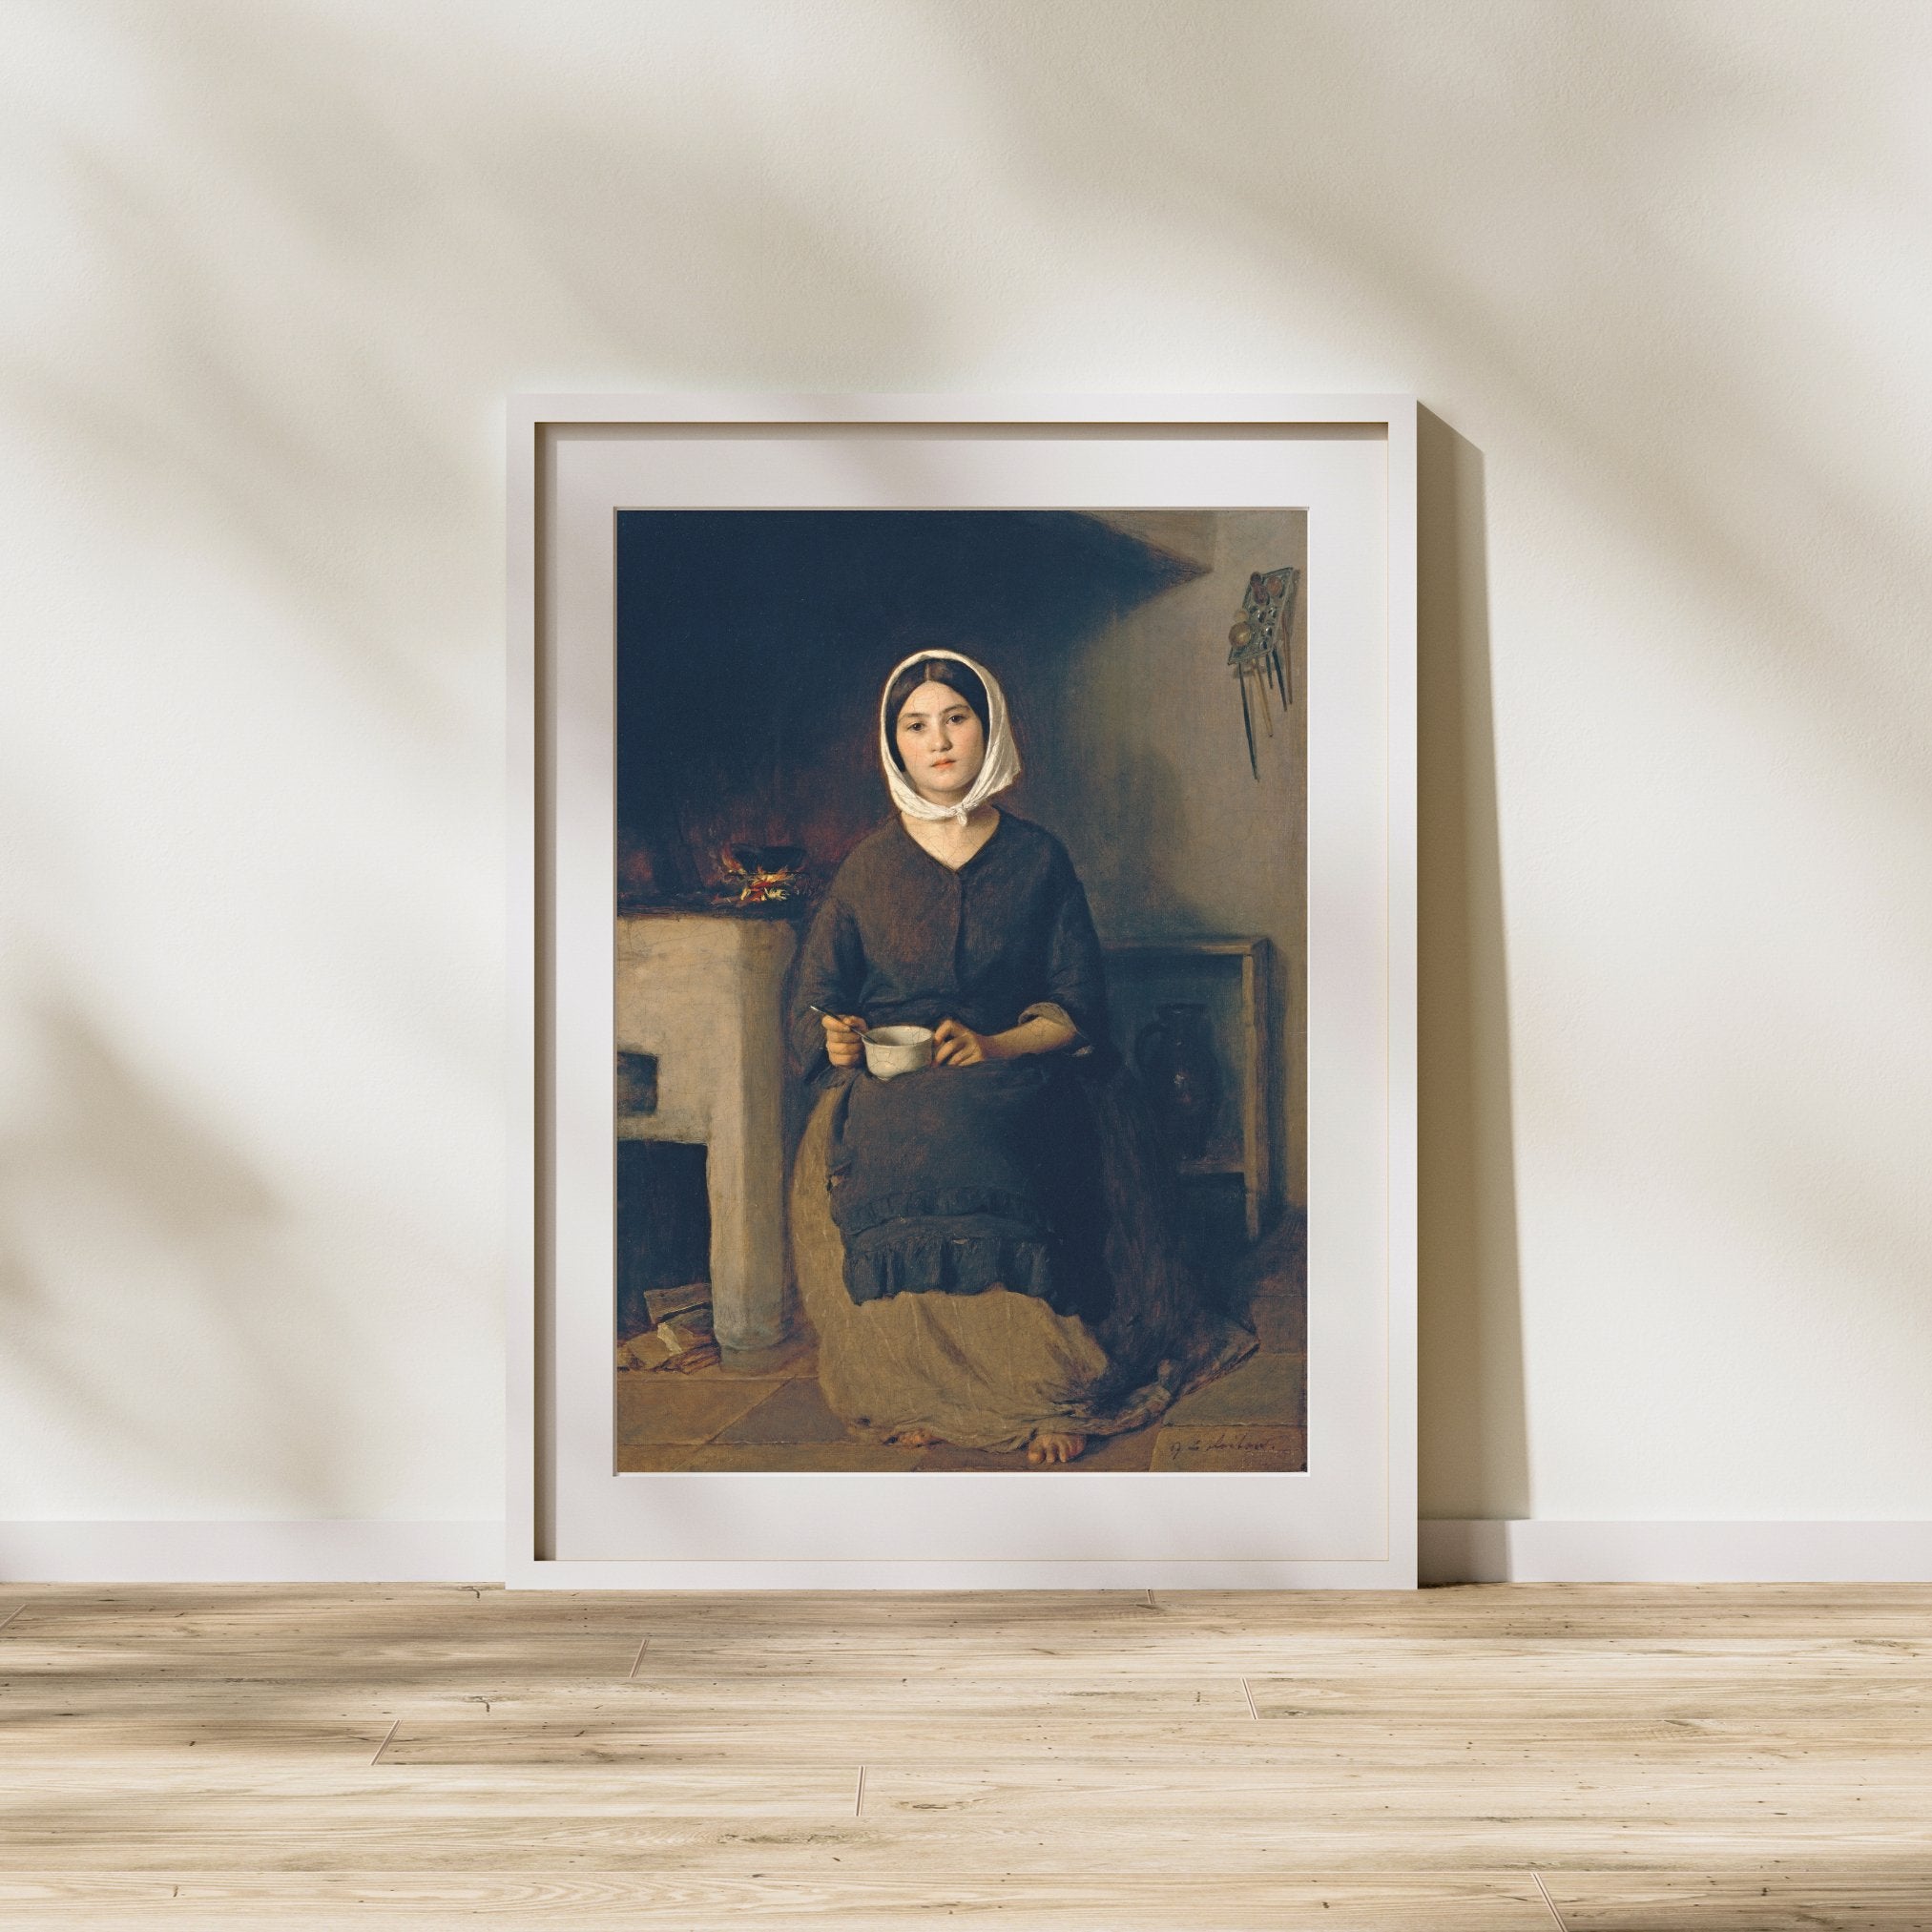 Seated woman in a Farm Kitchen, Country Female Portrait Print - Hartsholme Prints